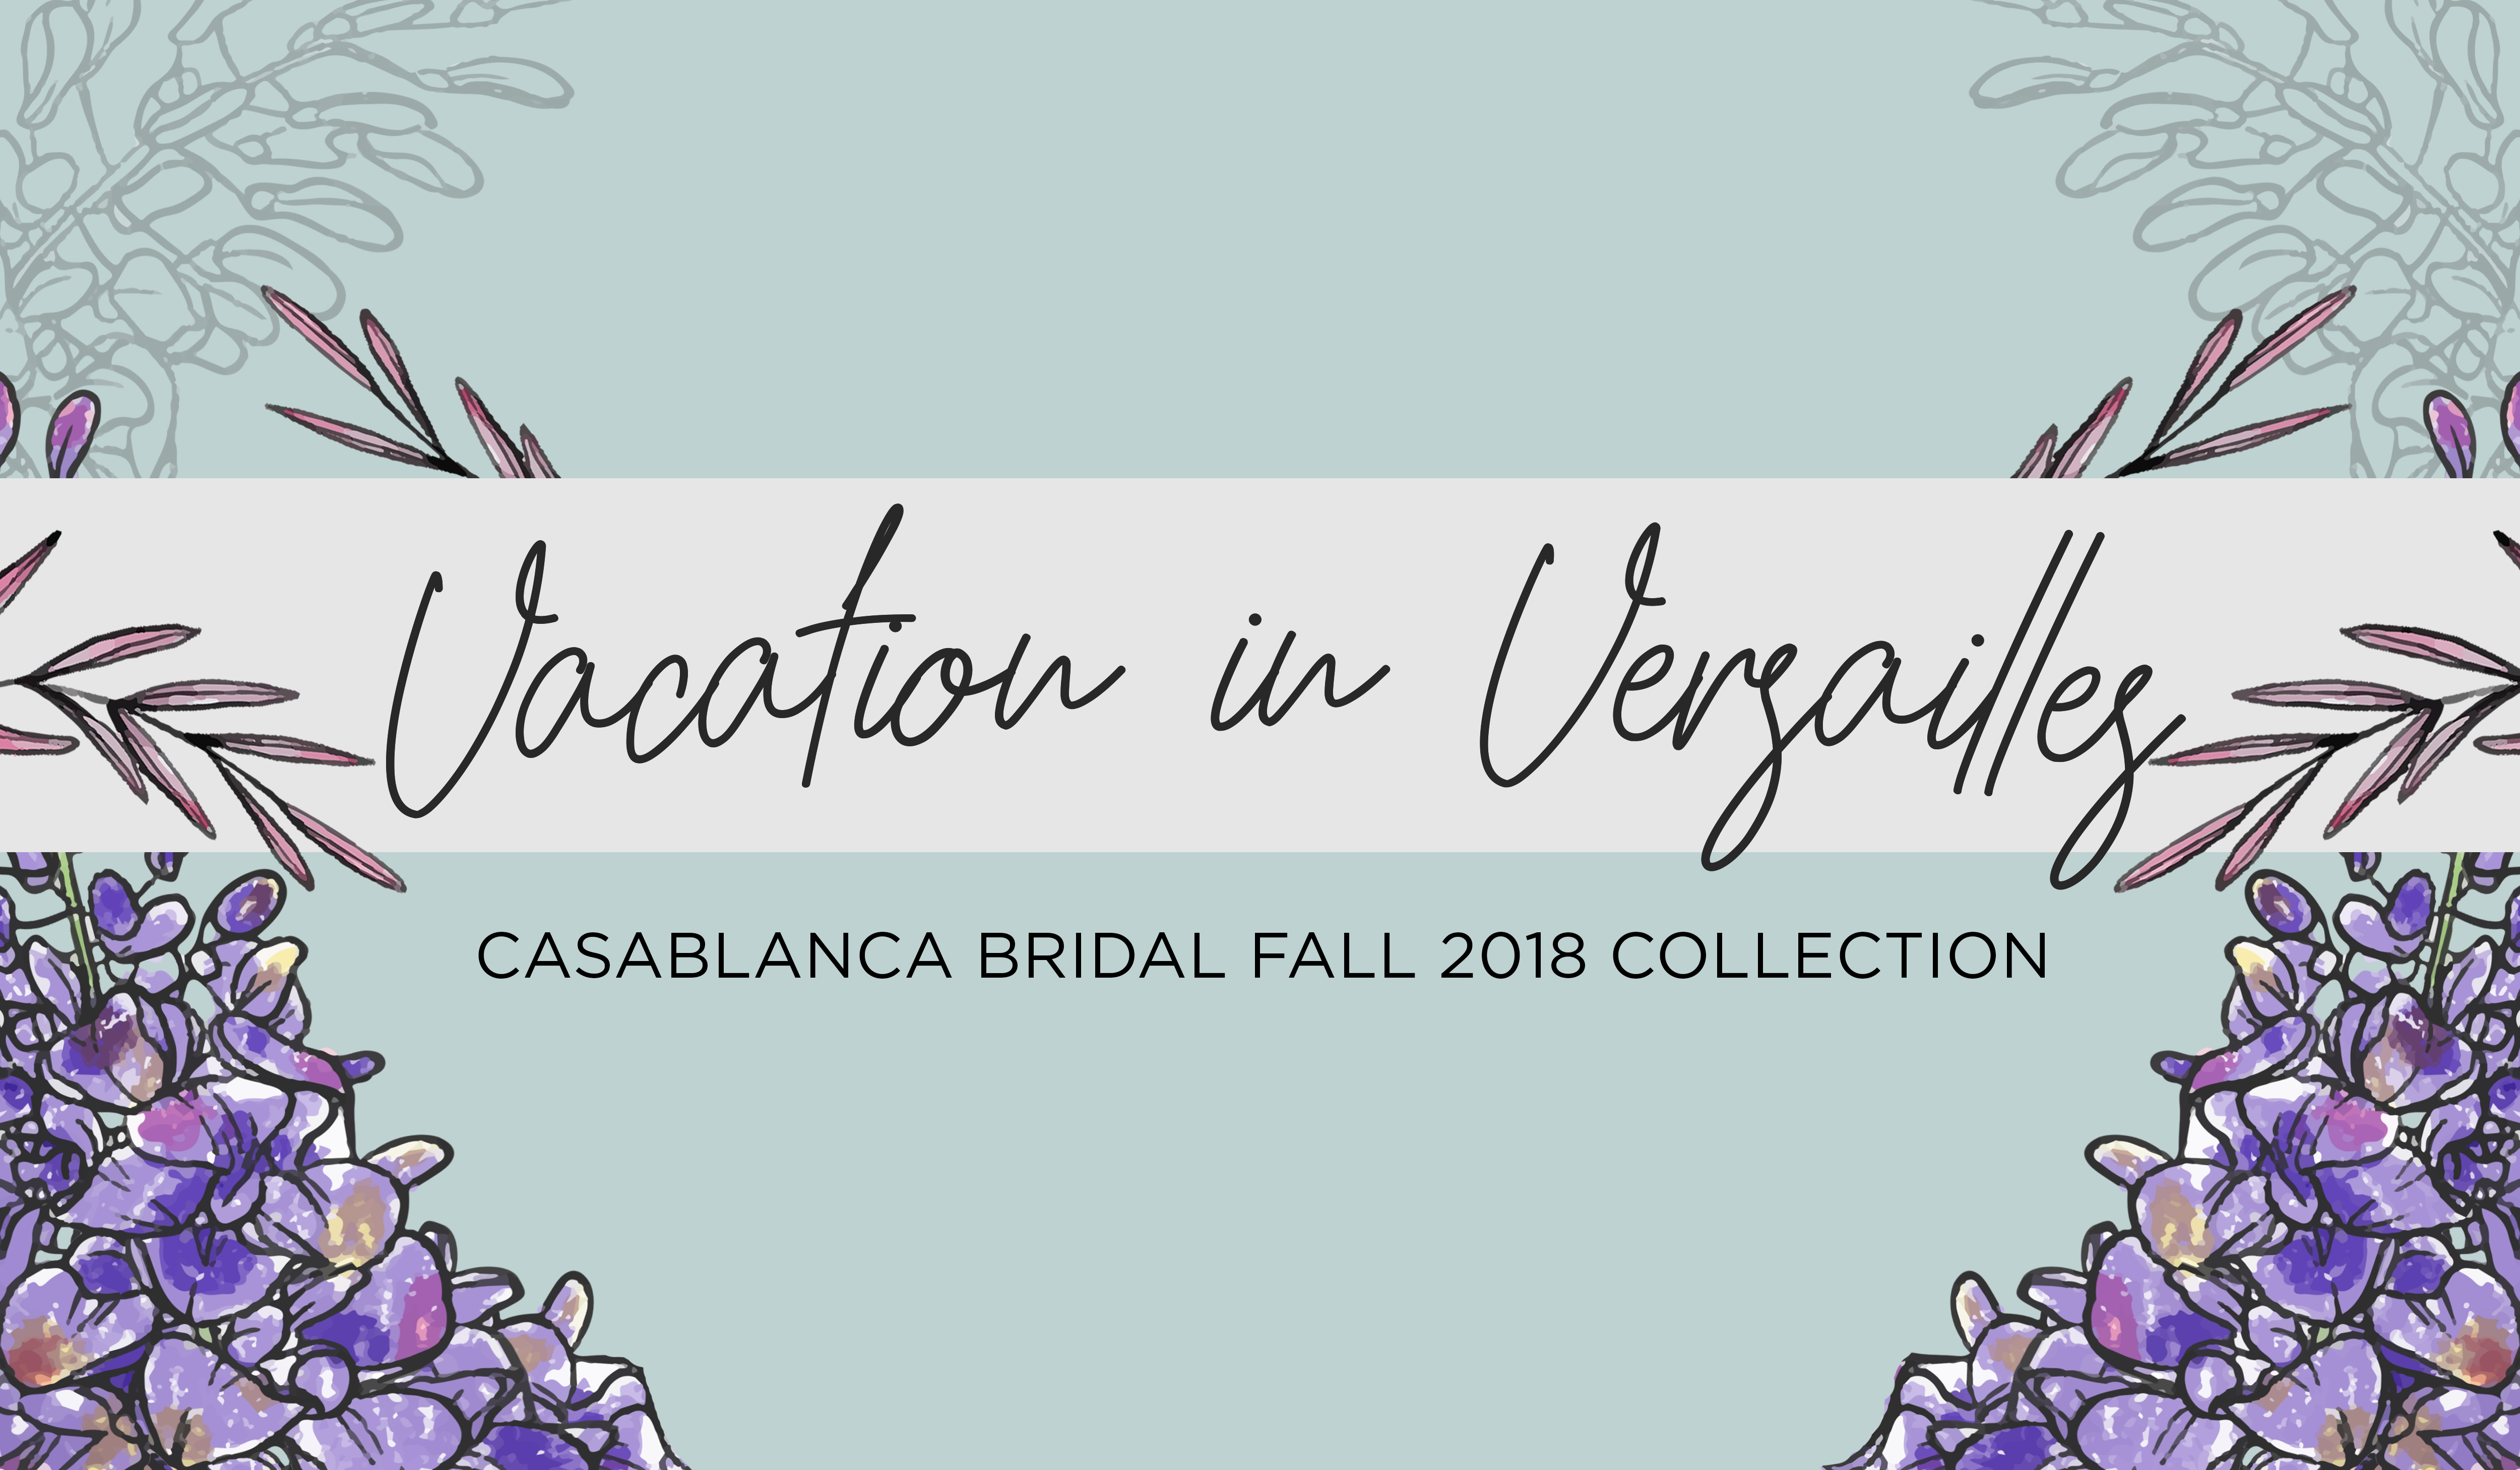 Casablanca Bridal | Vacation in Versailles Fall 2018 Collection